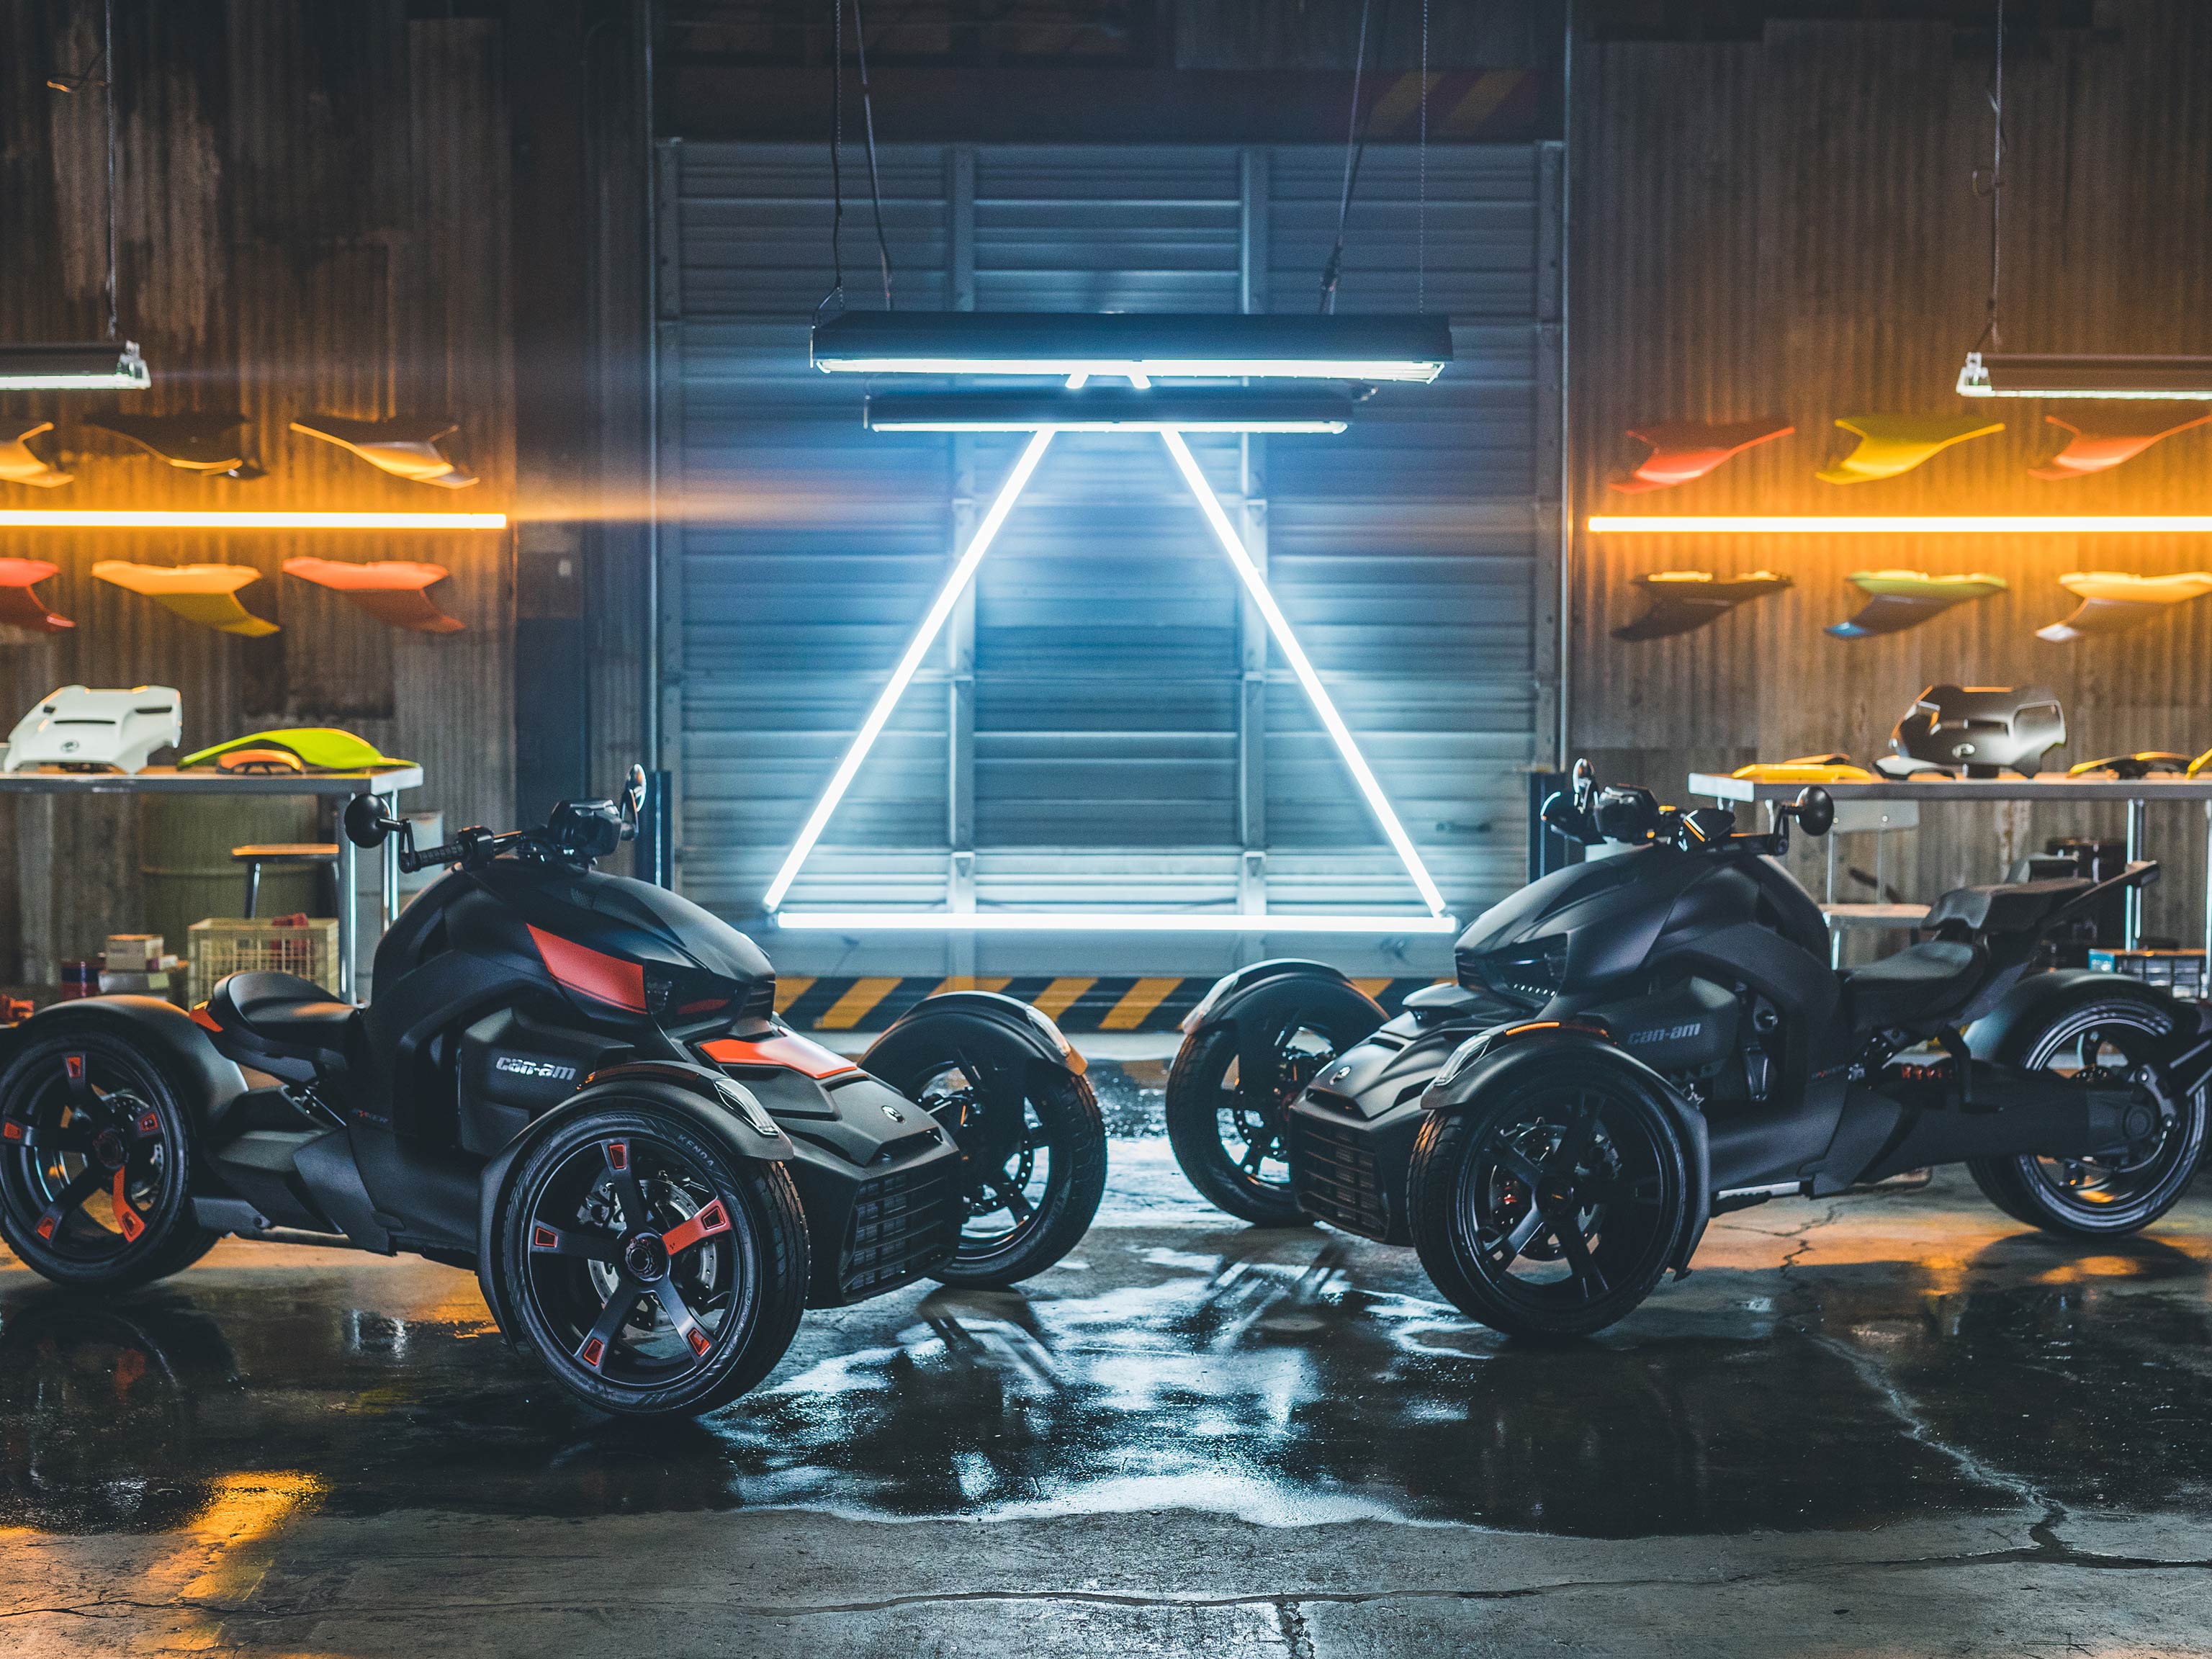 Et par Ryker motorcykler i garagen